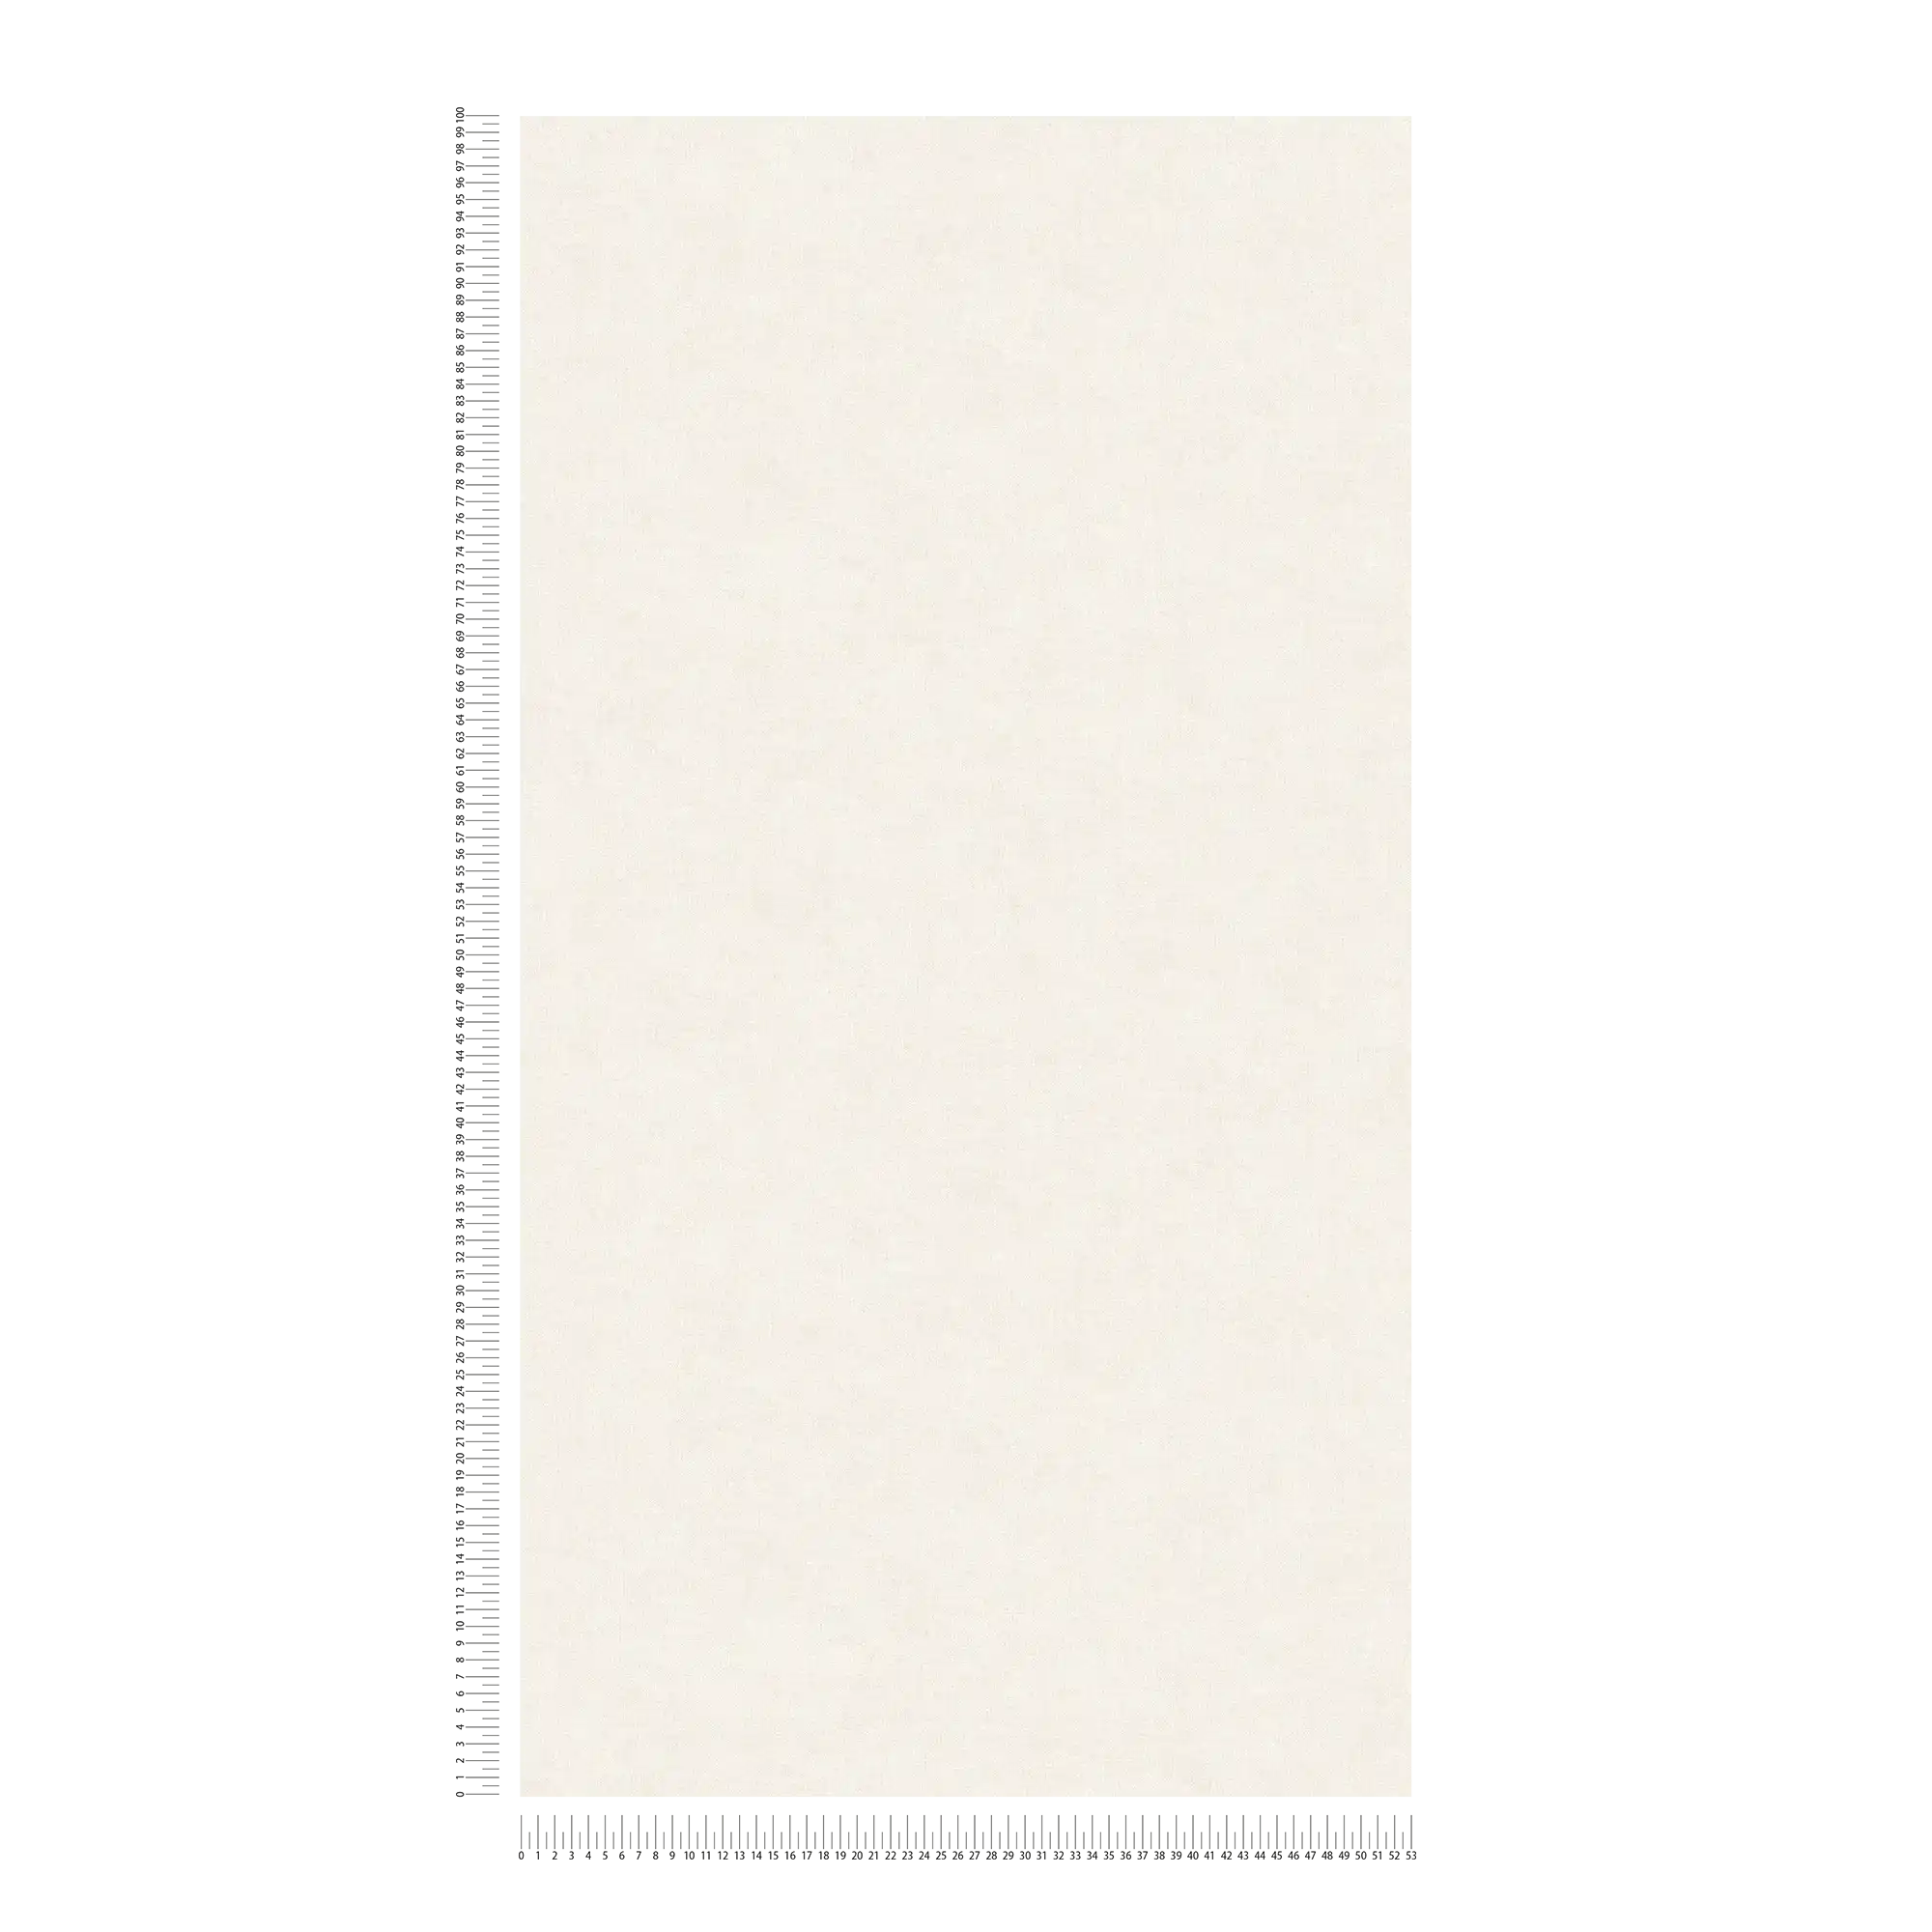             Carta da parati a tinta unita bianco panna, opaca con motivo strutturato
        